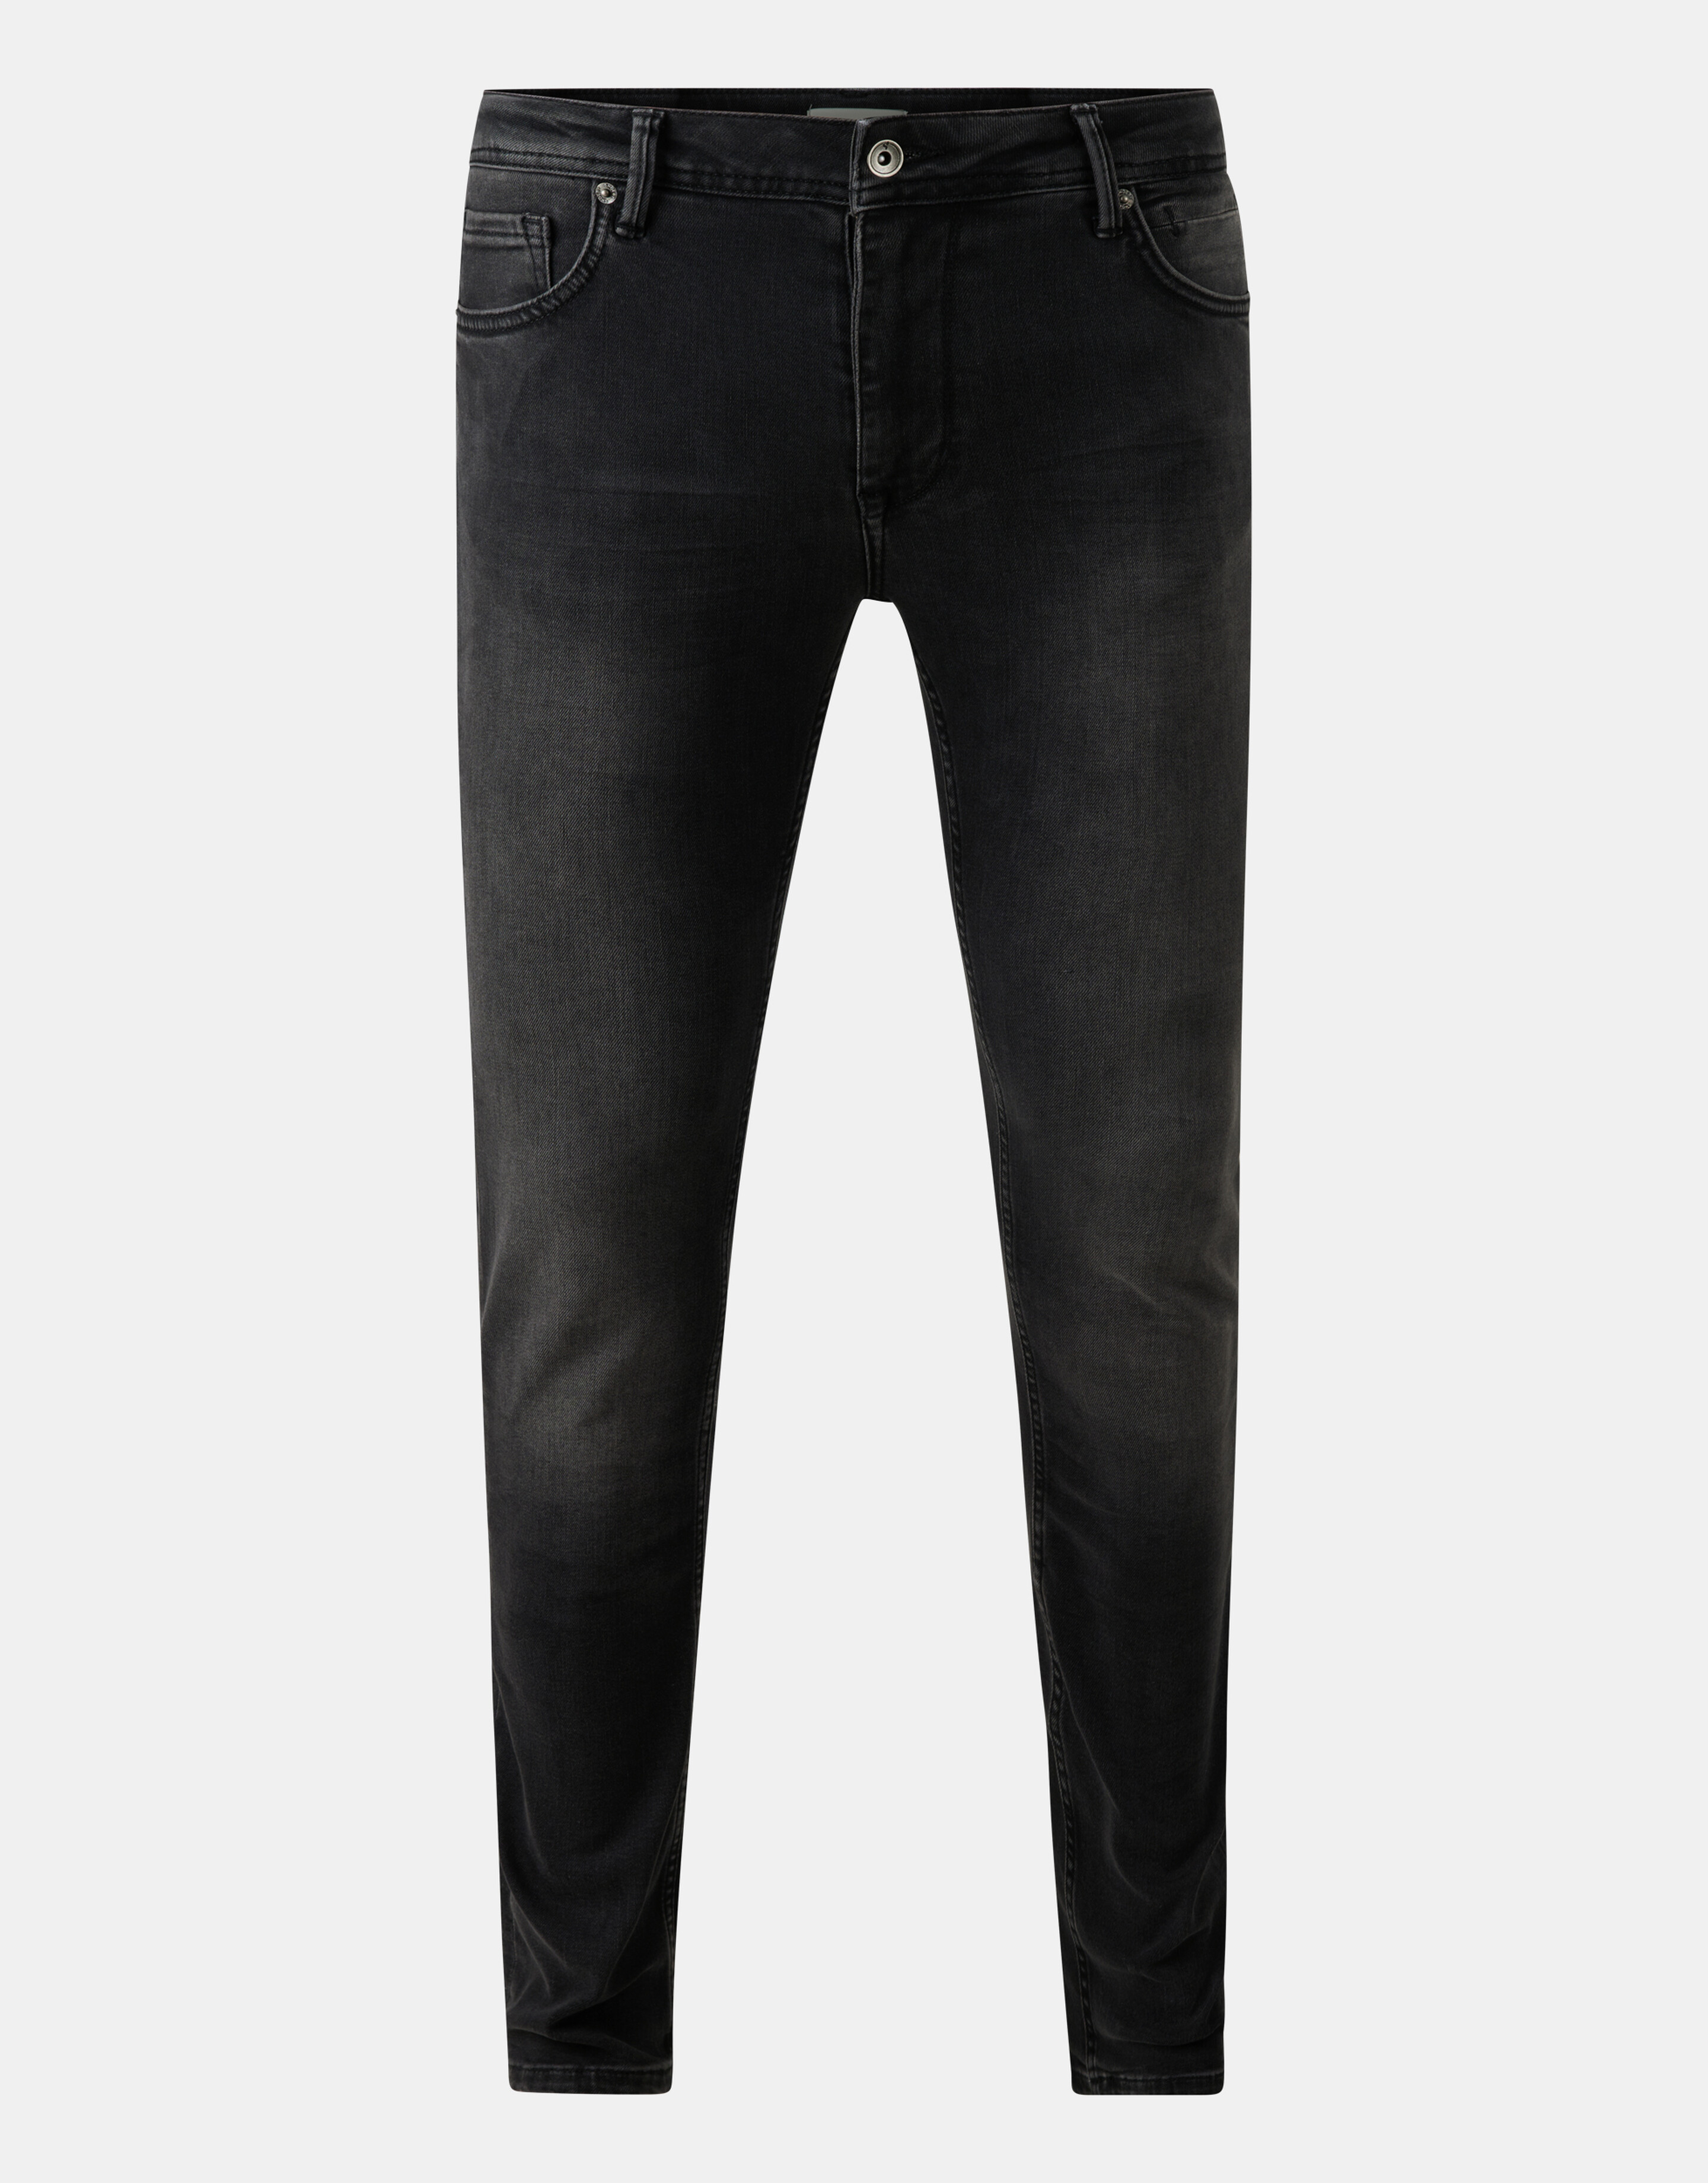 Slim Jeans Washed Black L34 Refill